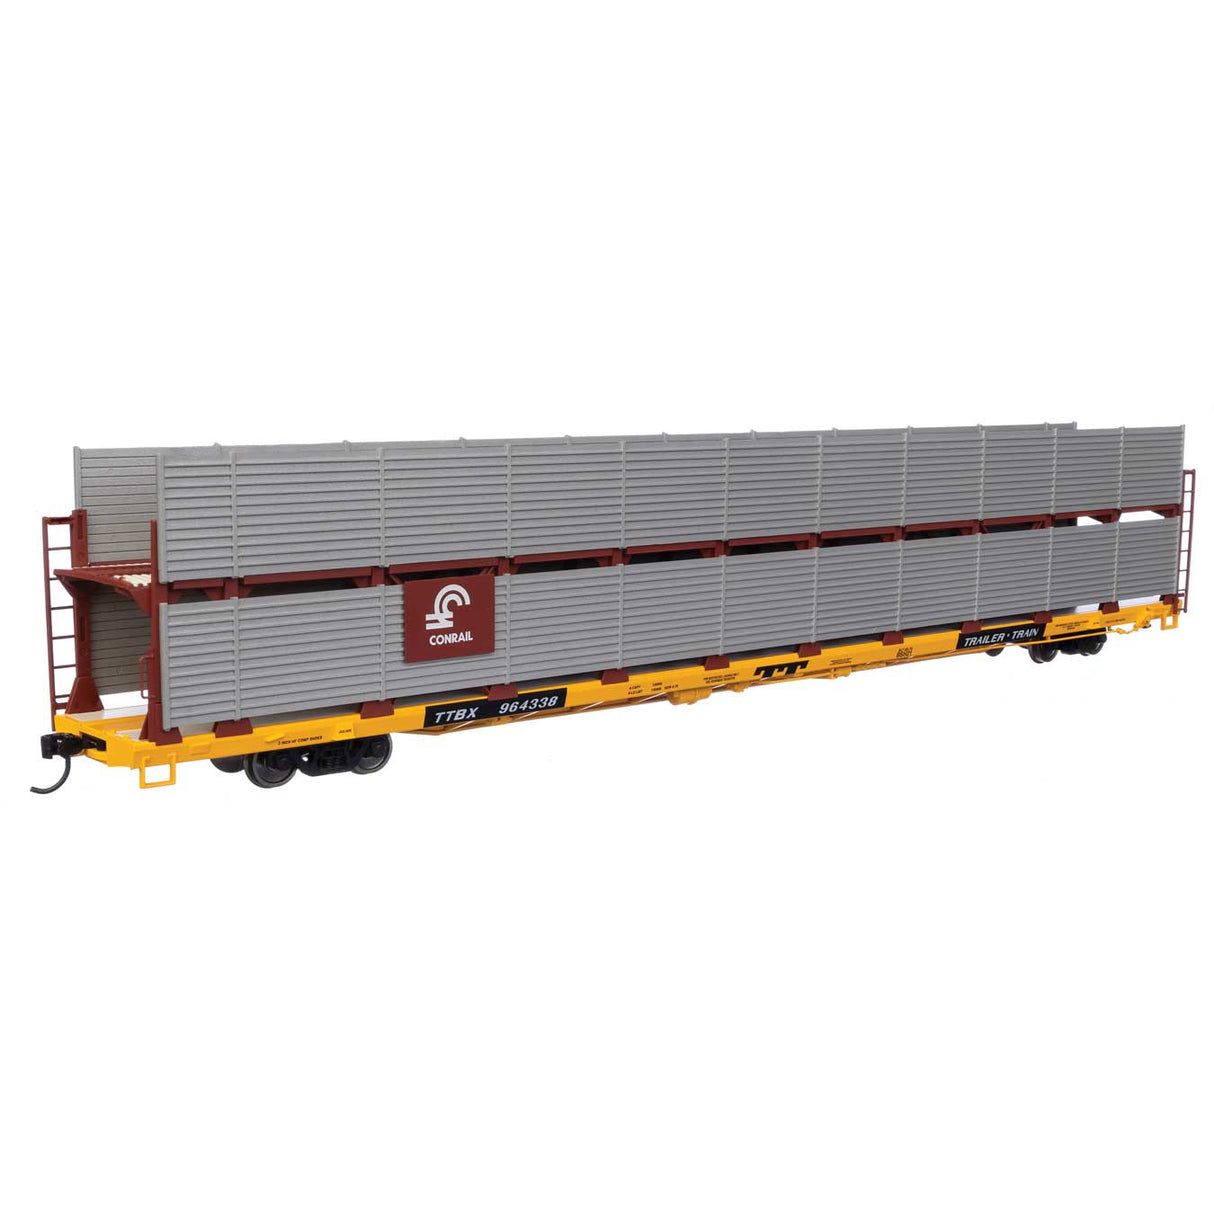 Walthers Mainline HO Scale Conrail Rack / Trailer-Train Flatcar TTBX #964338 89' Flatcar w/Bi-Level Shielded Auto Rack